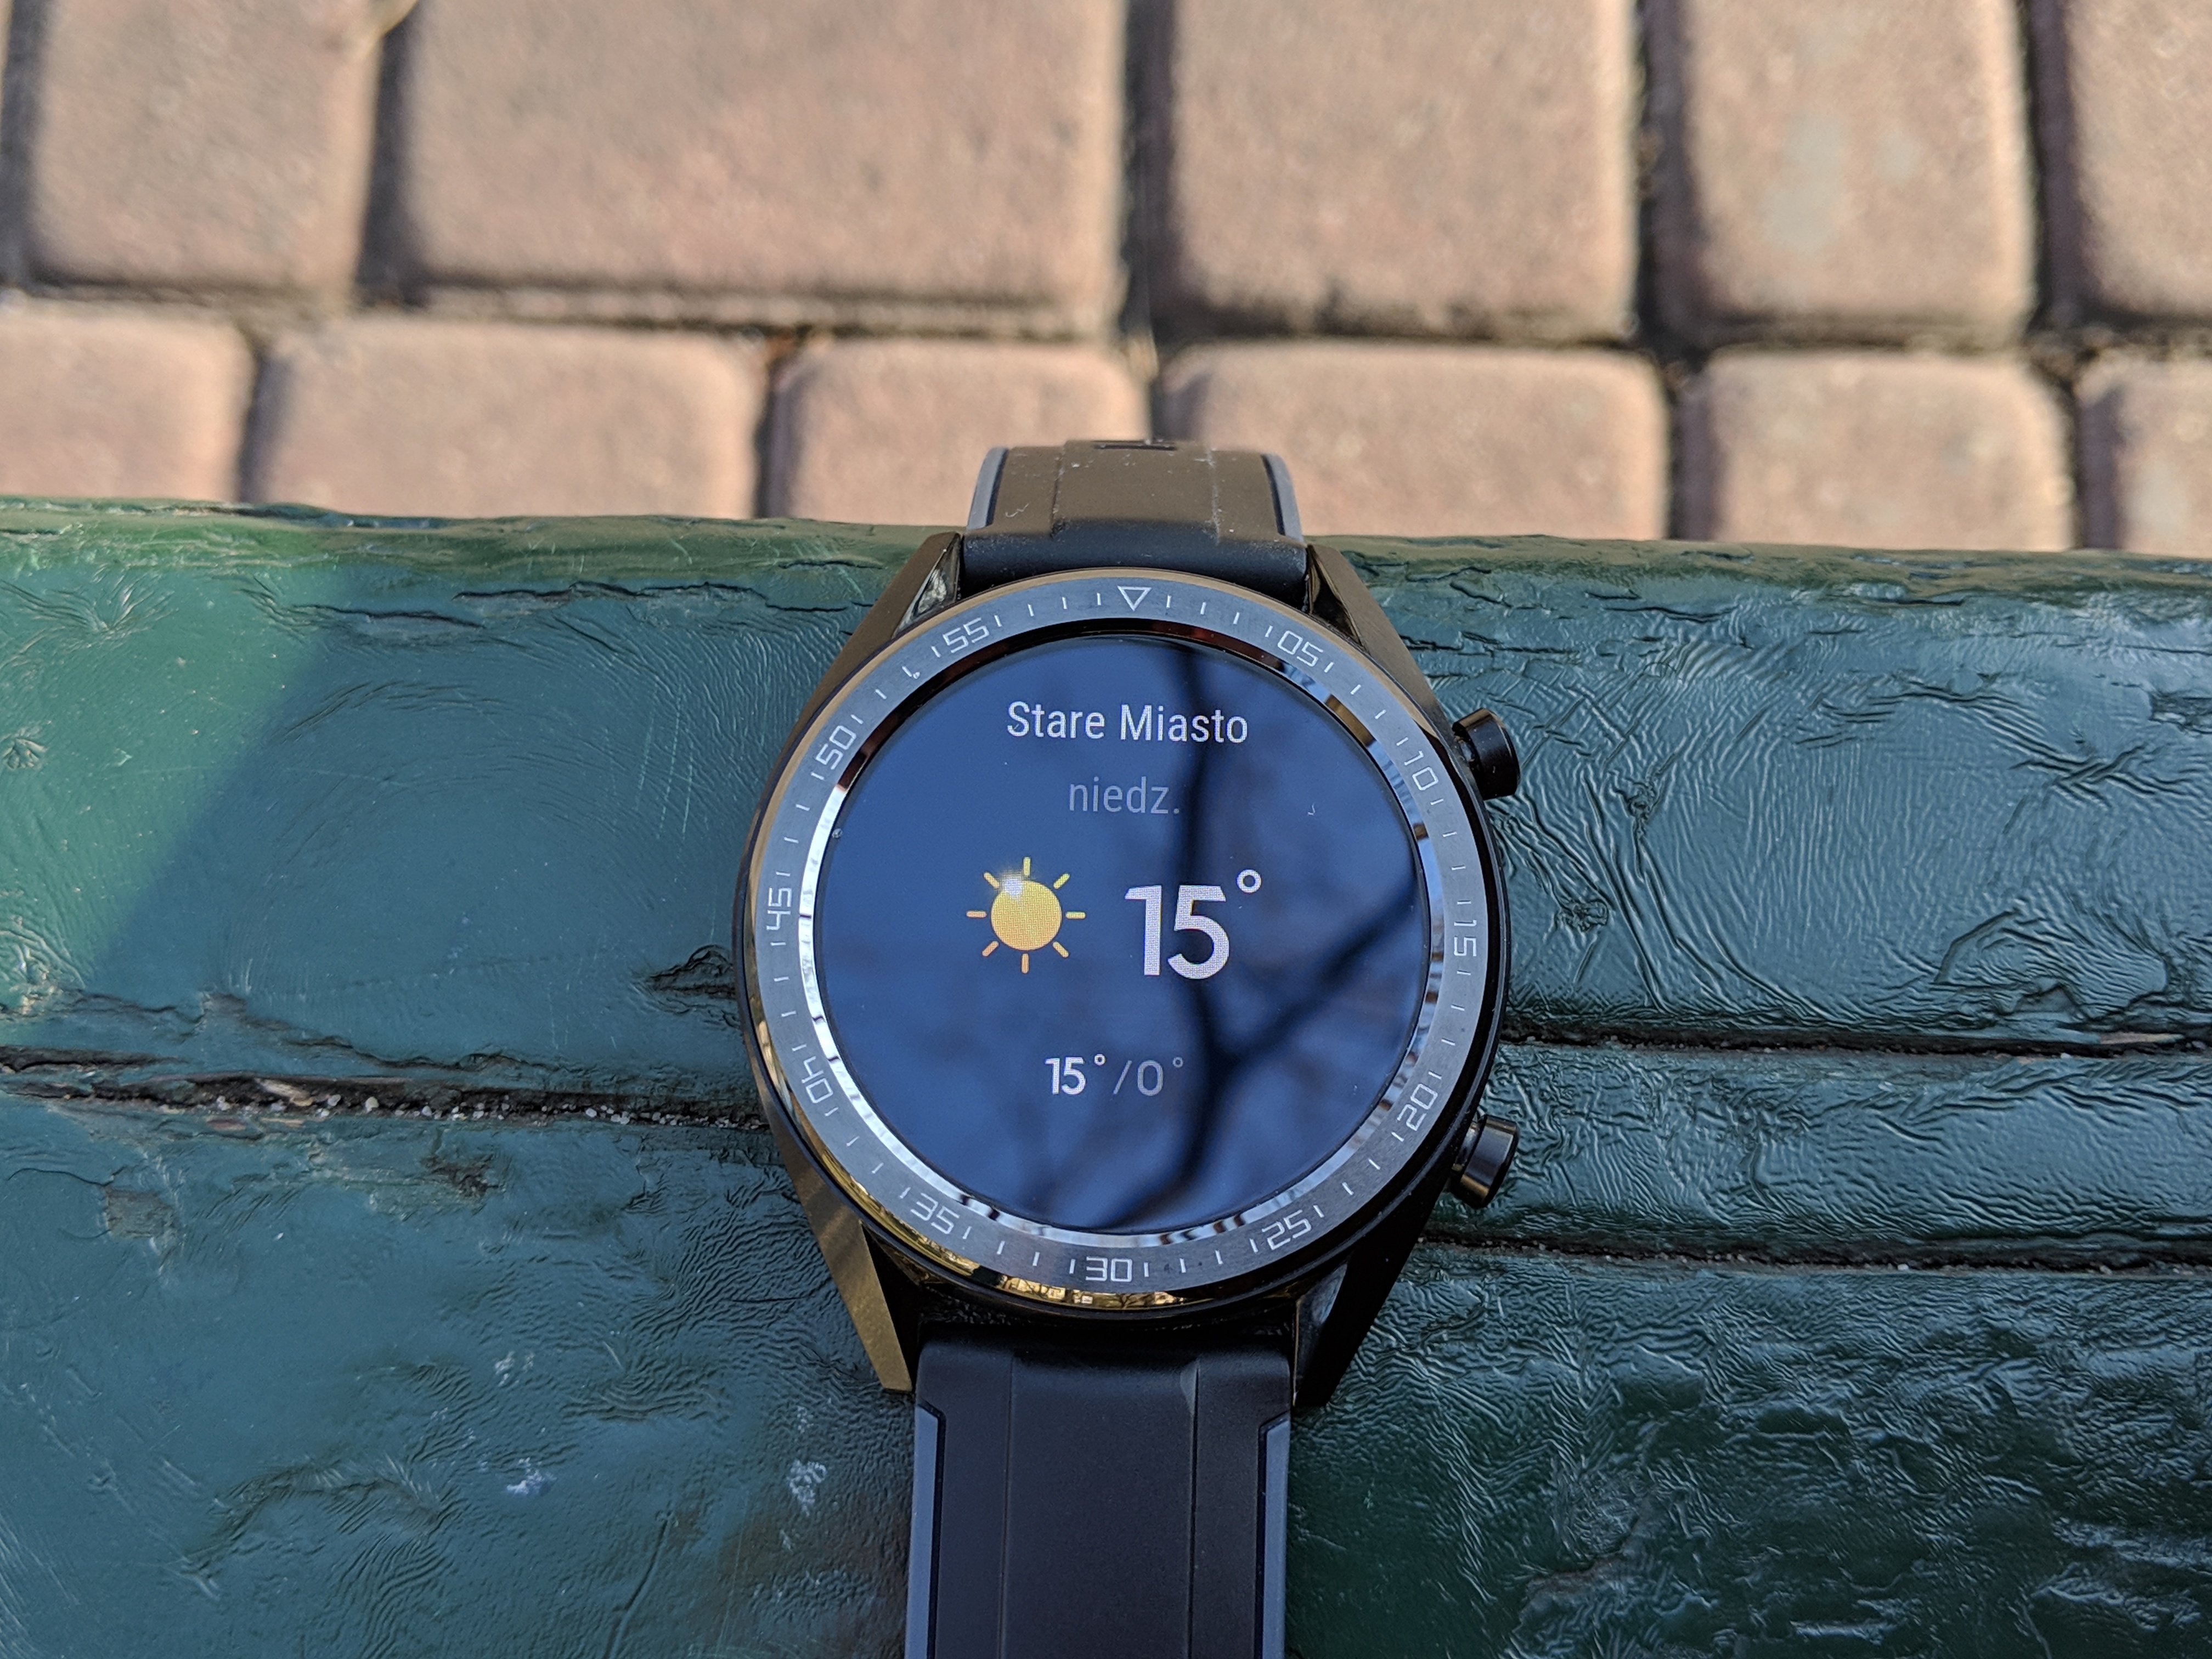 Huawei Watch GT (TestHub.pl)